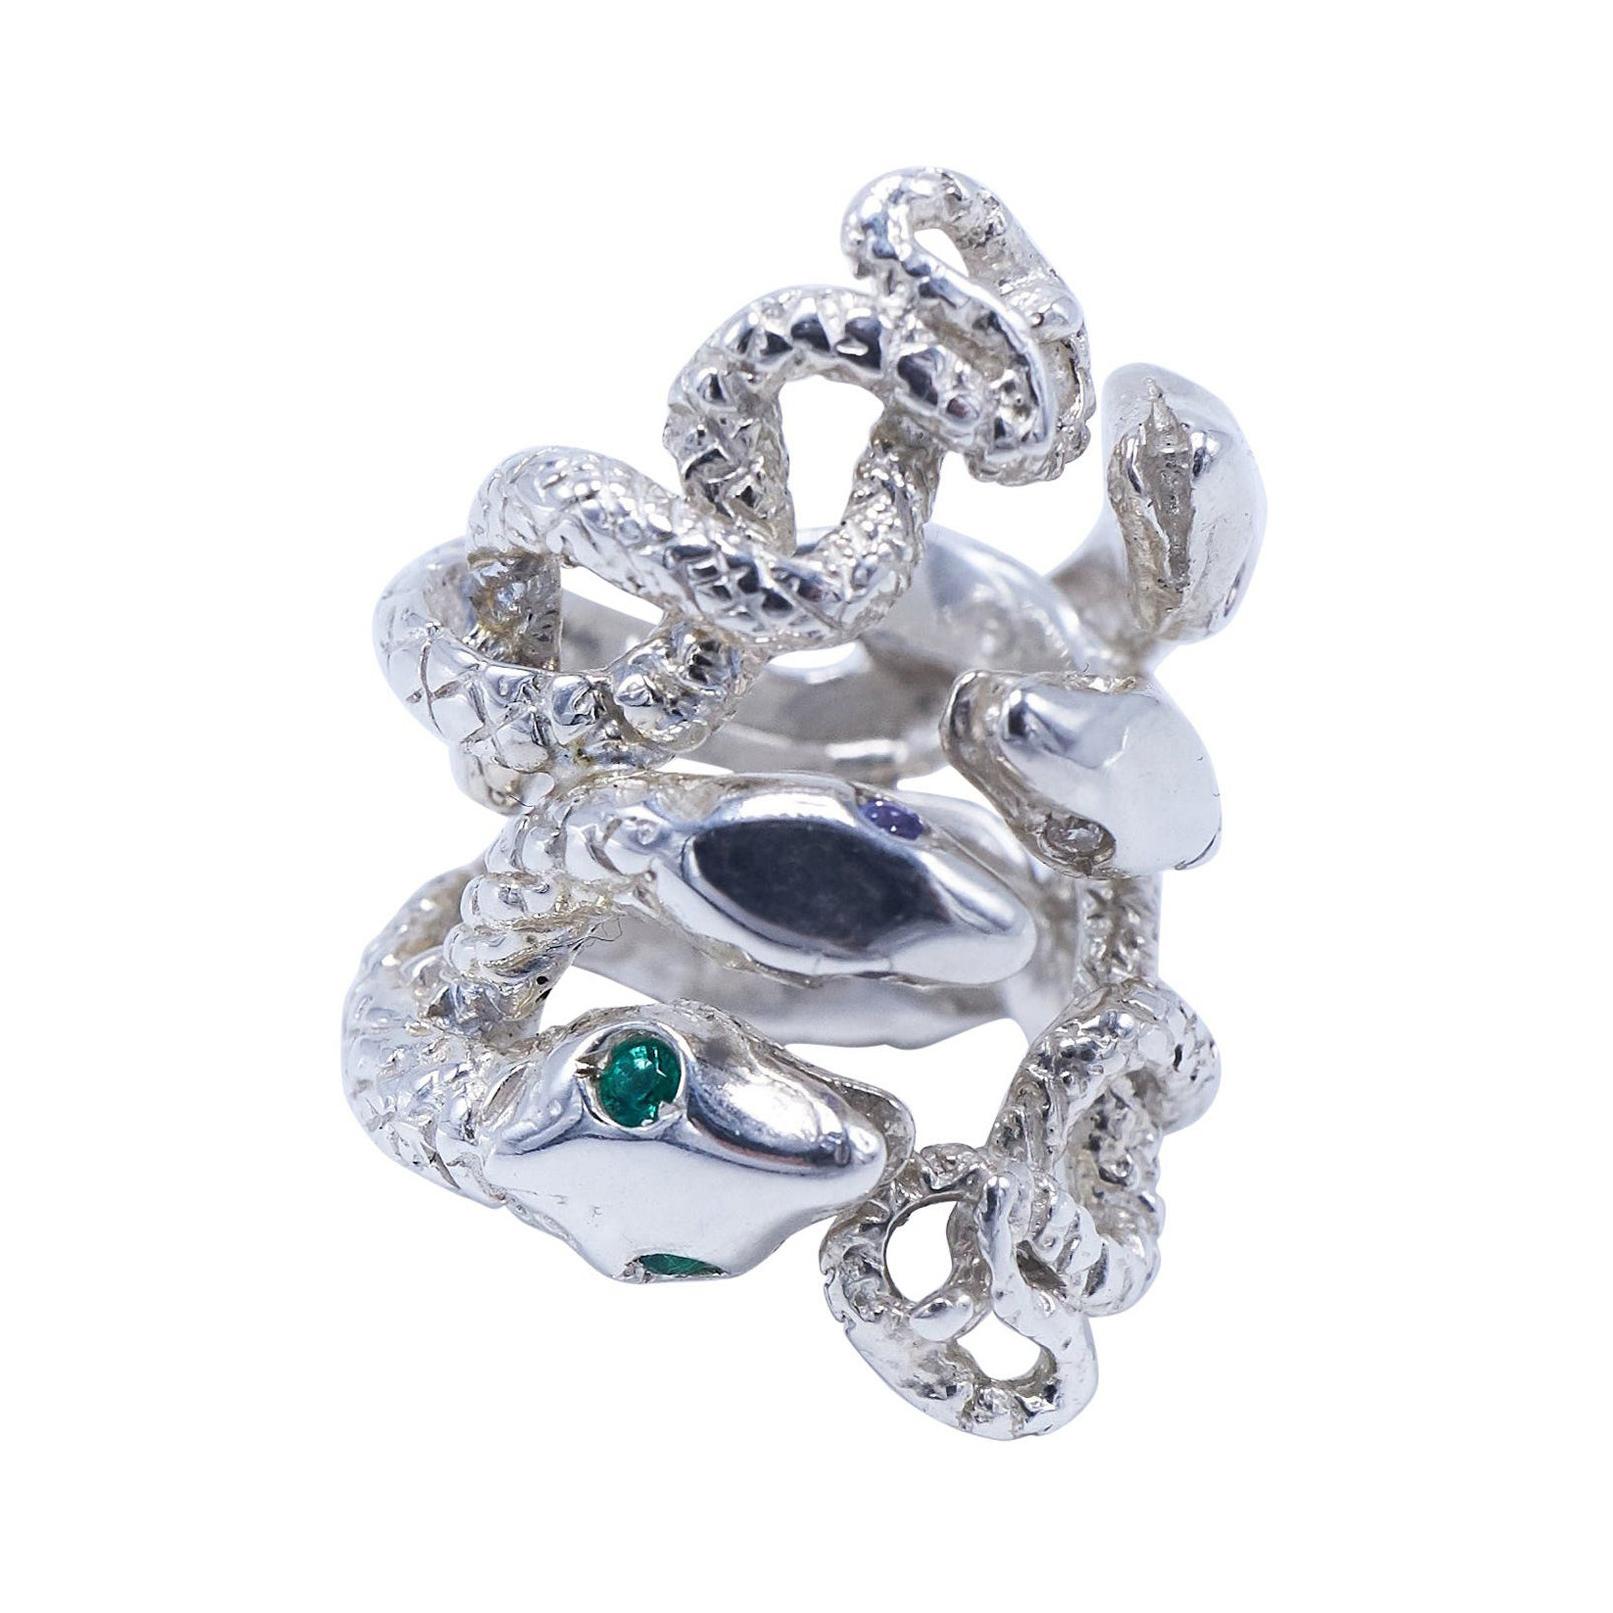 2 pcs Emerald 2 pcs White Diamond 2 pcs Pink Sapphire 2 pcs Tanzanite Snake Silver Ring Open Adjustable J Dauphin

J DAUPHIN 